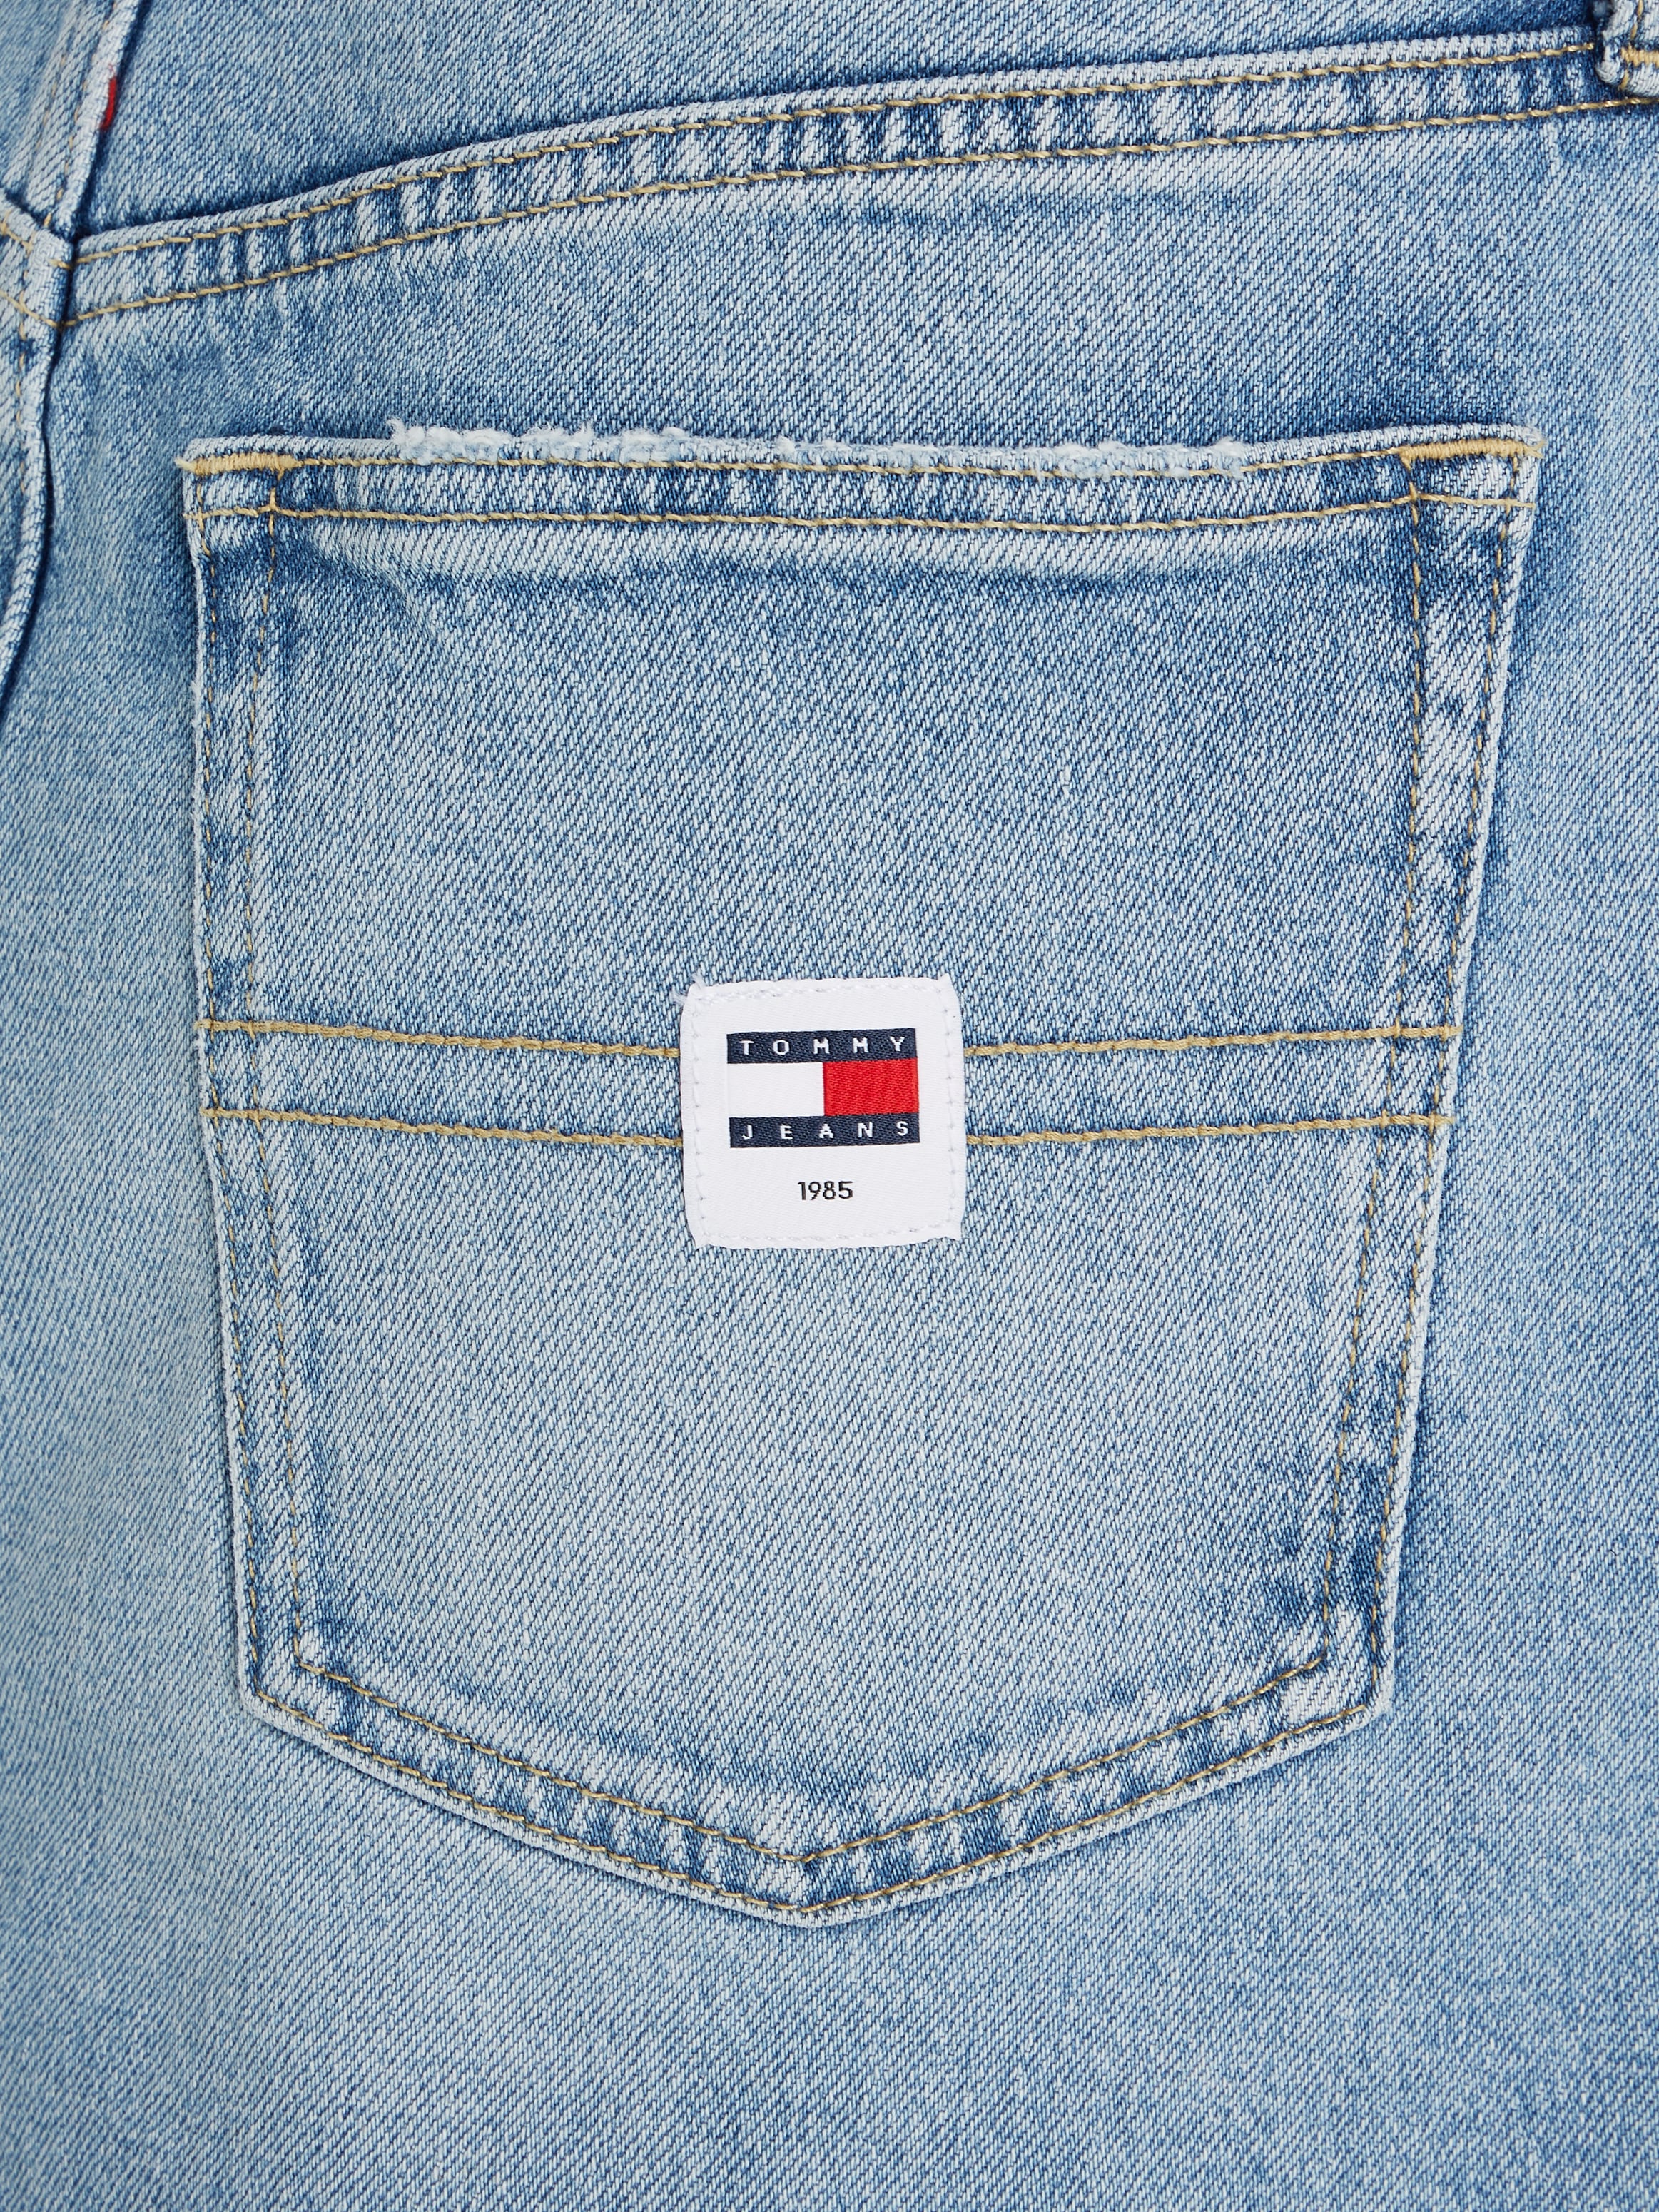 OTTO MR SKIRT bei mit Jeans »IZZIE online AH6114«, kaufen Ledermarkenlabel Jeansrock Tommy MN